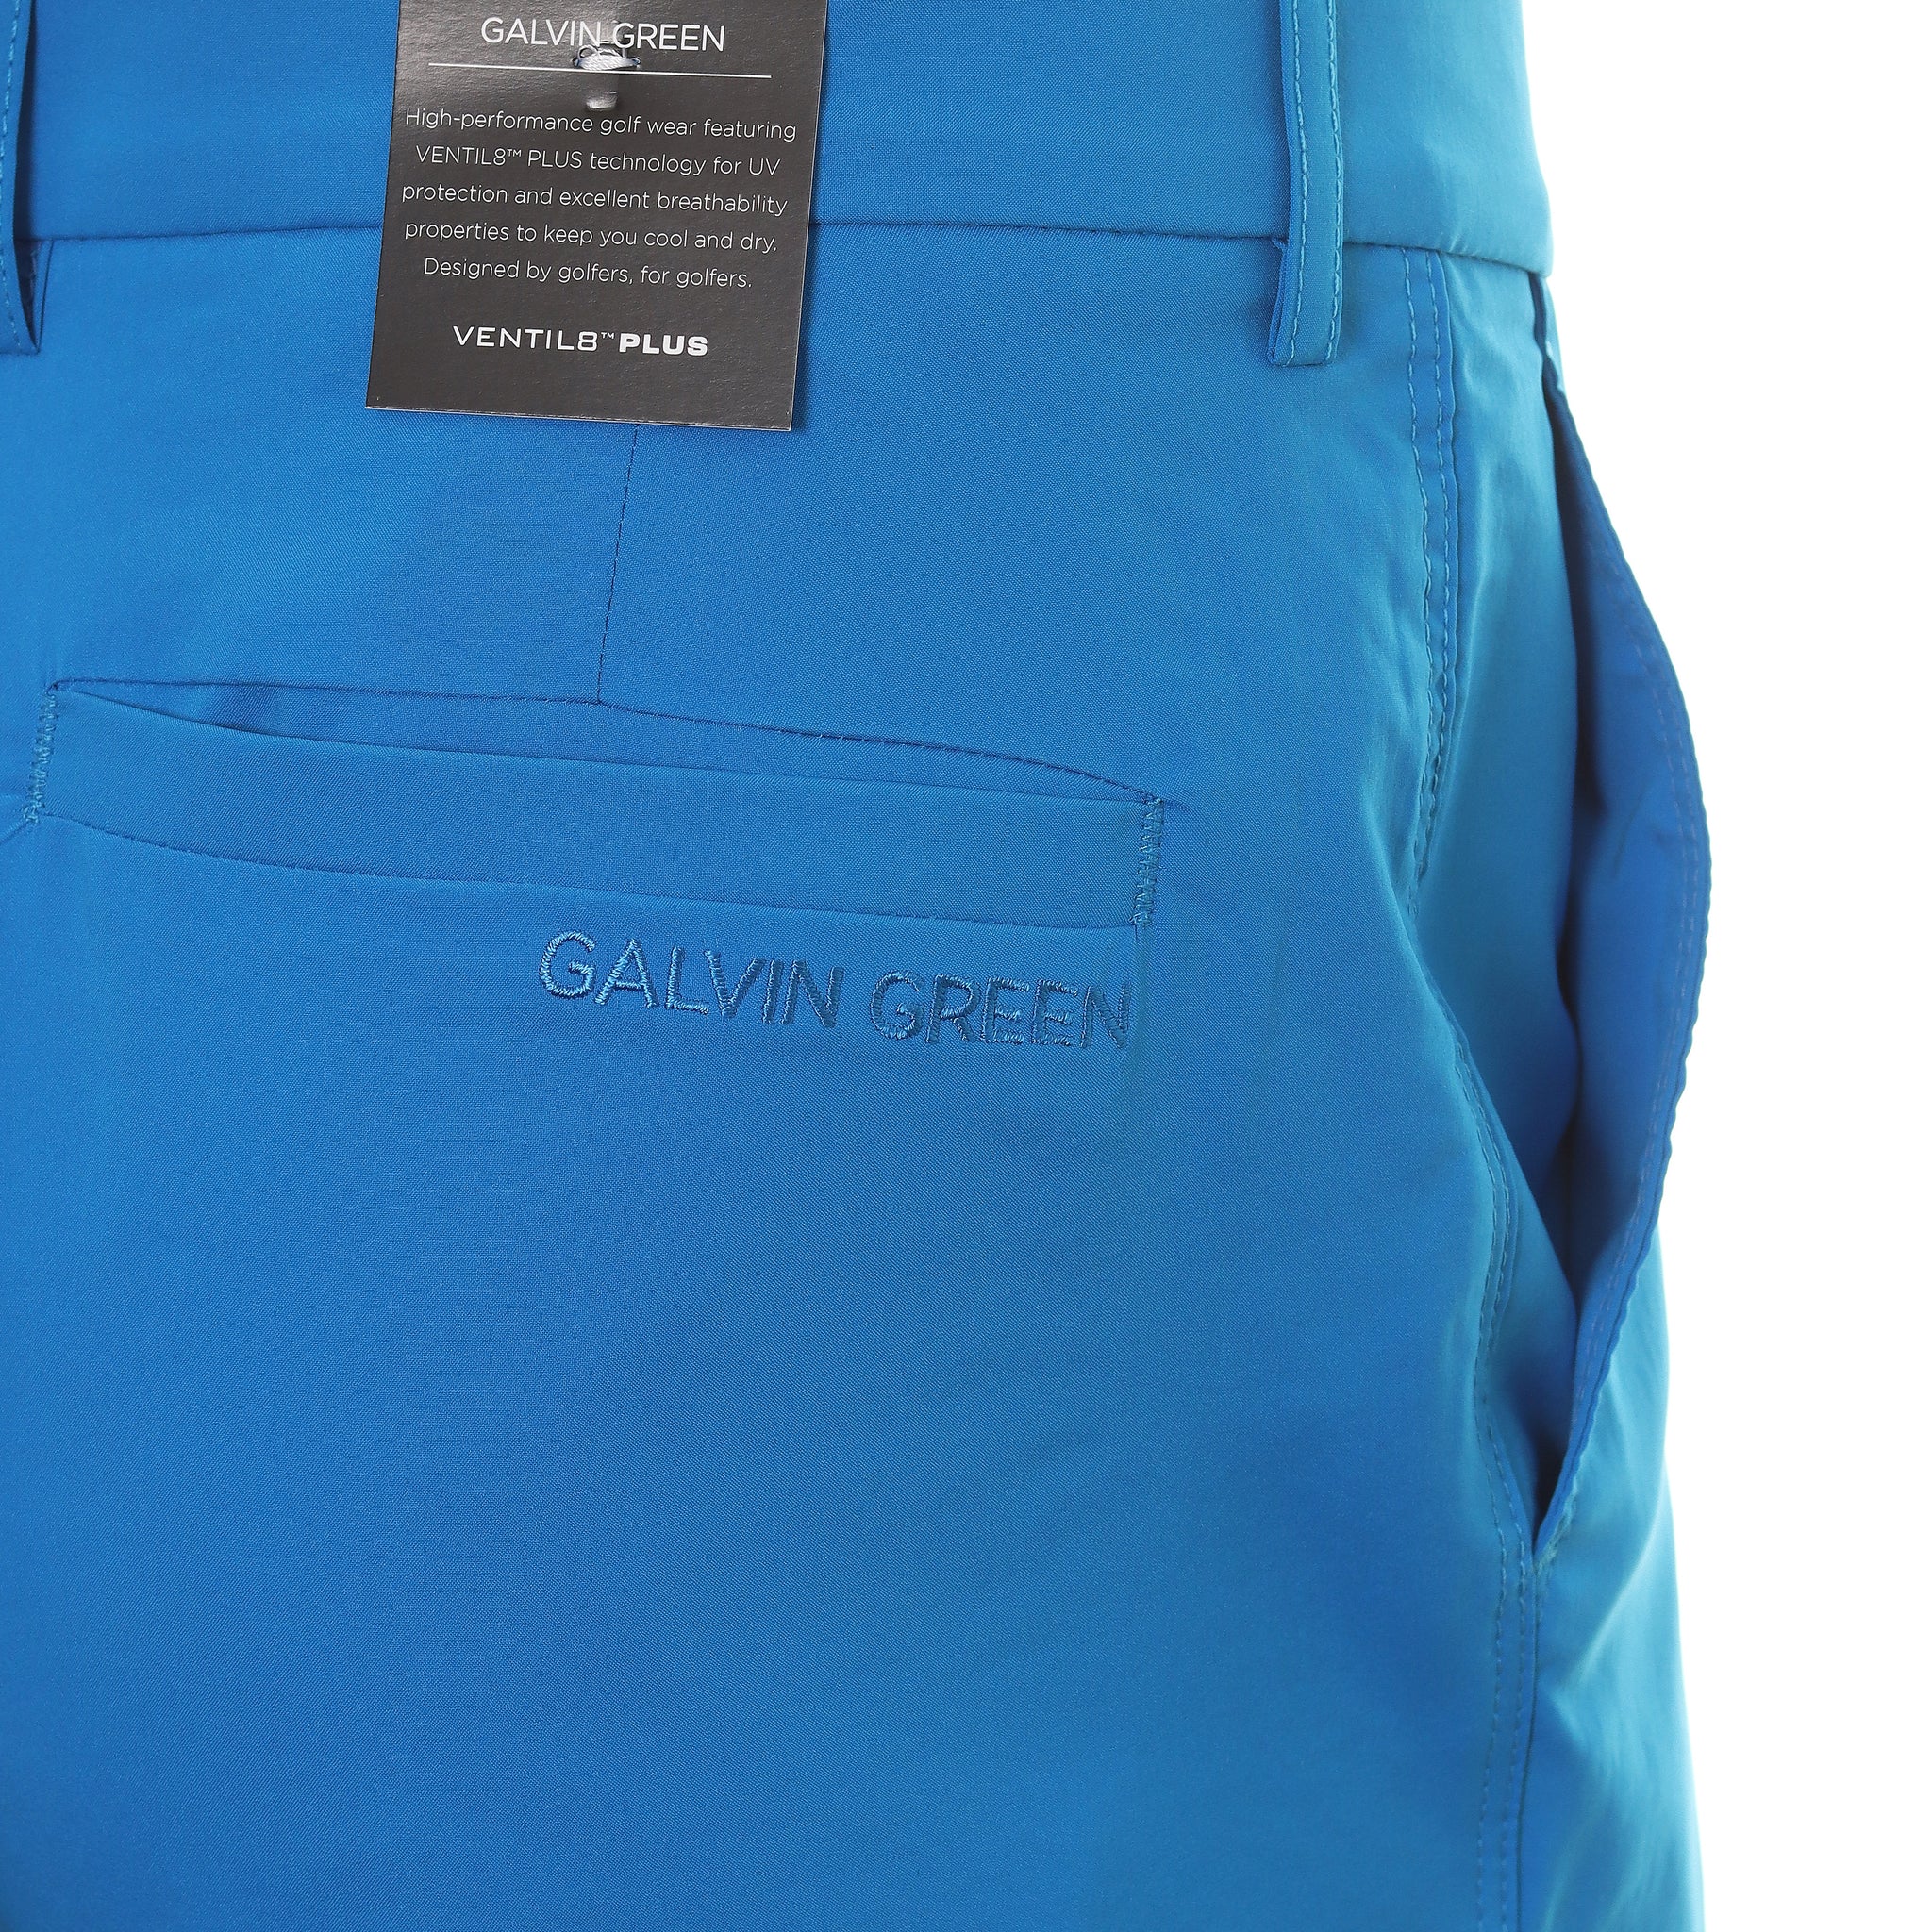 Galvin Green Nixon Ventil8+ Golf Trousers